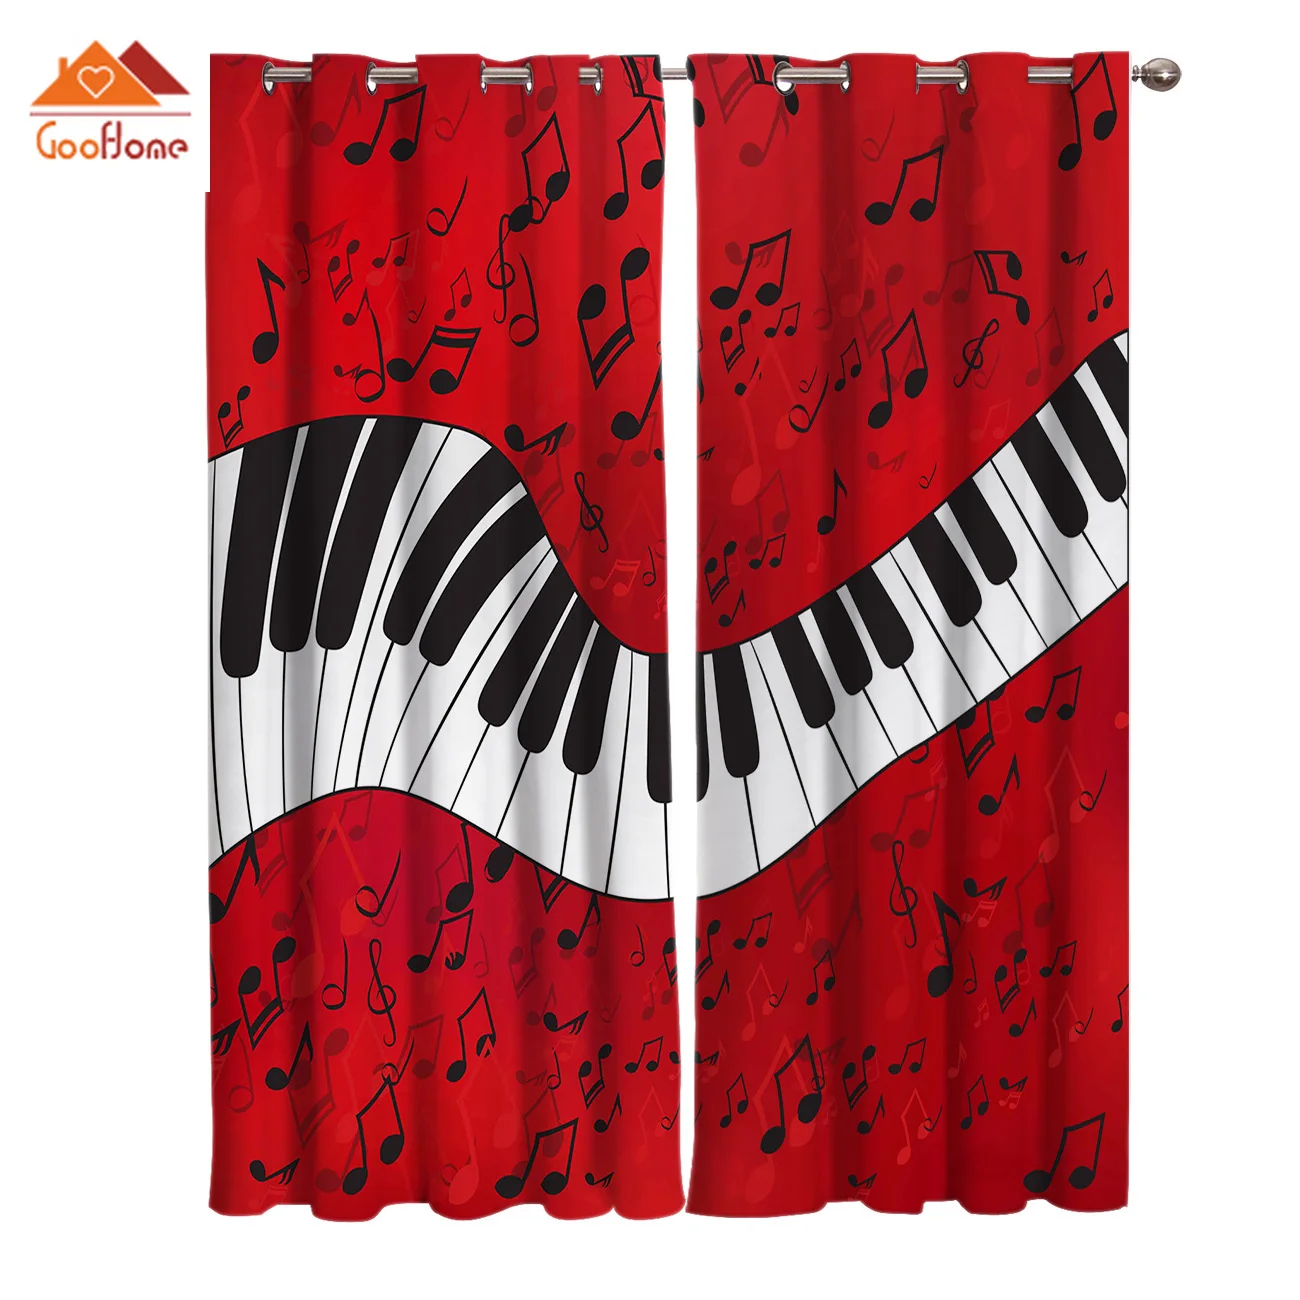 Piano Music Note-cortinas de ventana de fondo rojo para sala de estar, cortinas de tela para exteriores, decoración del hogar